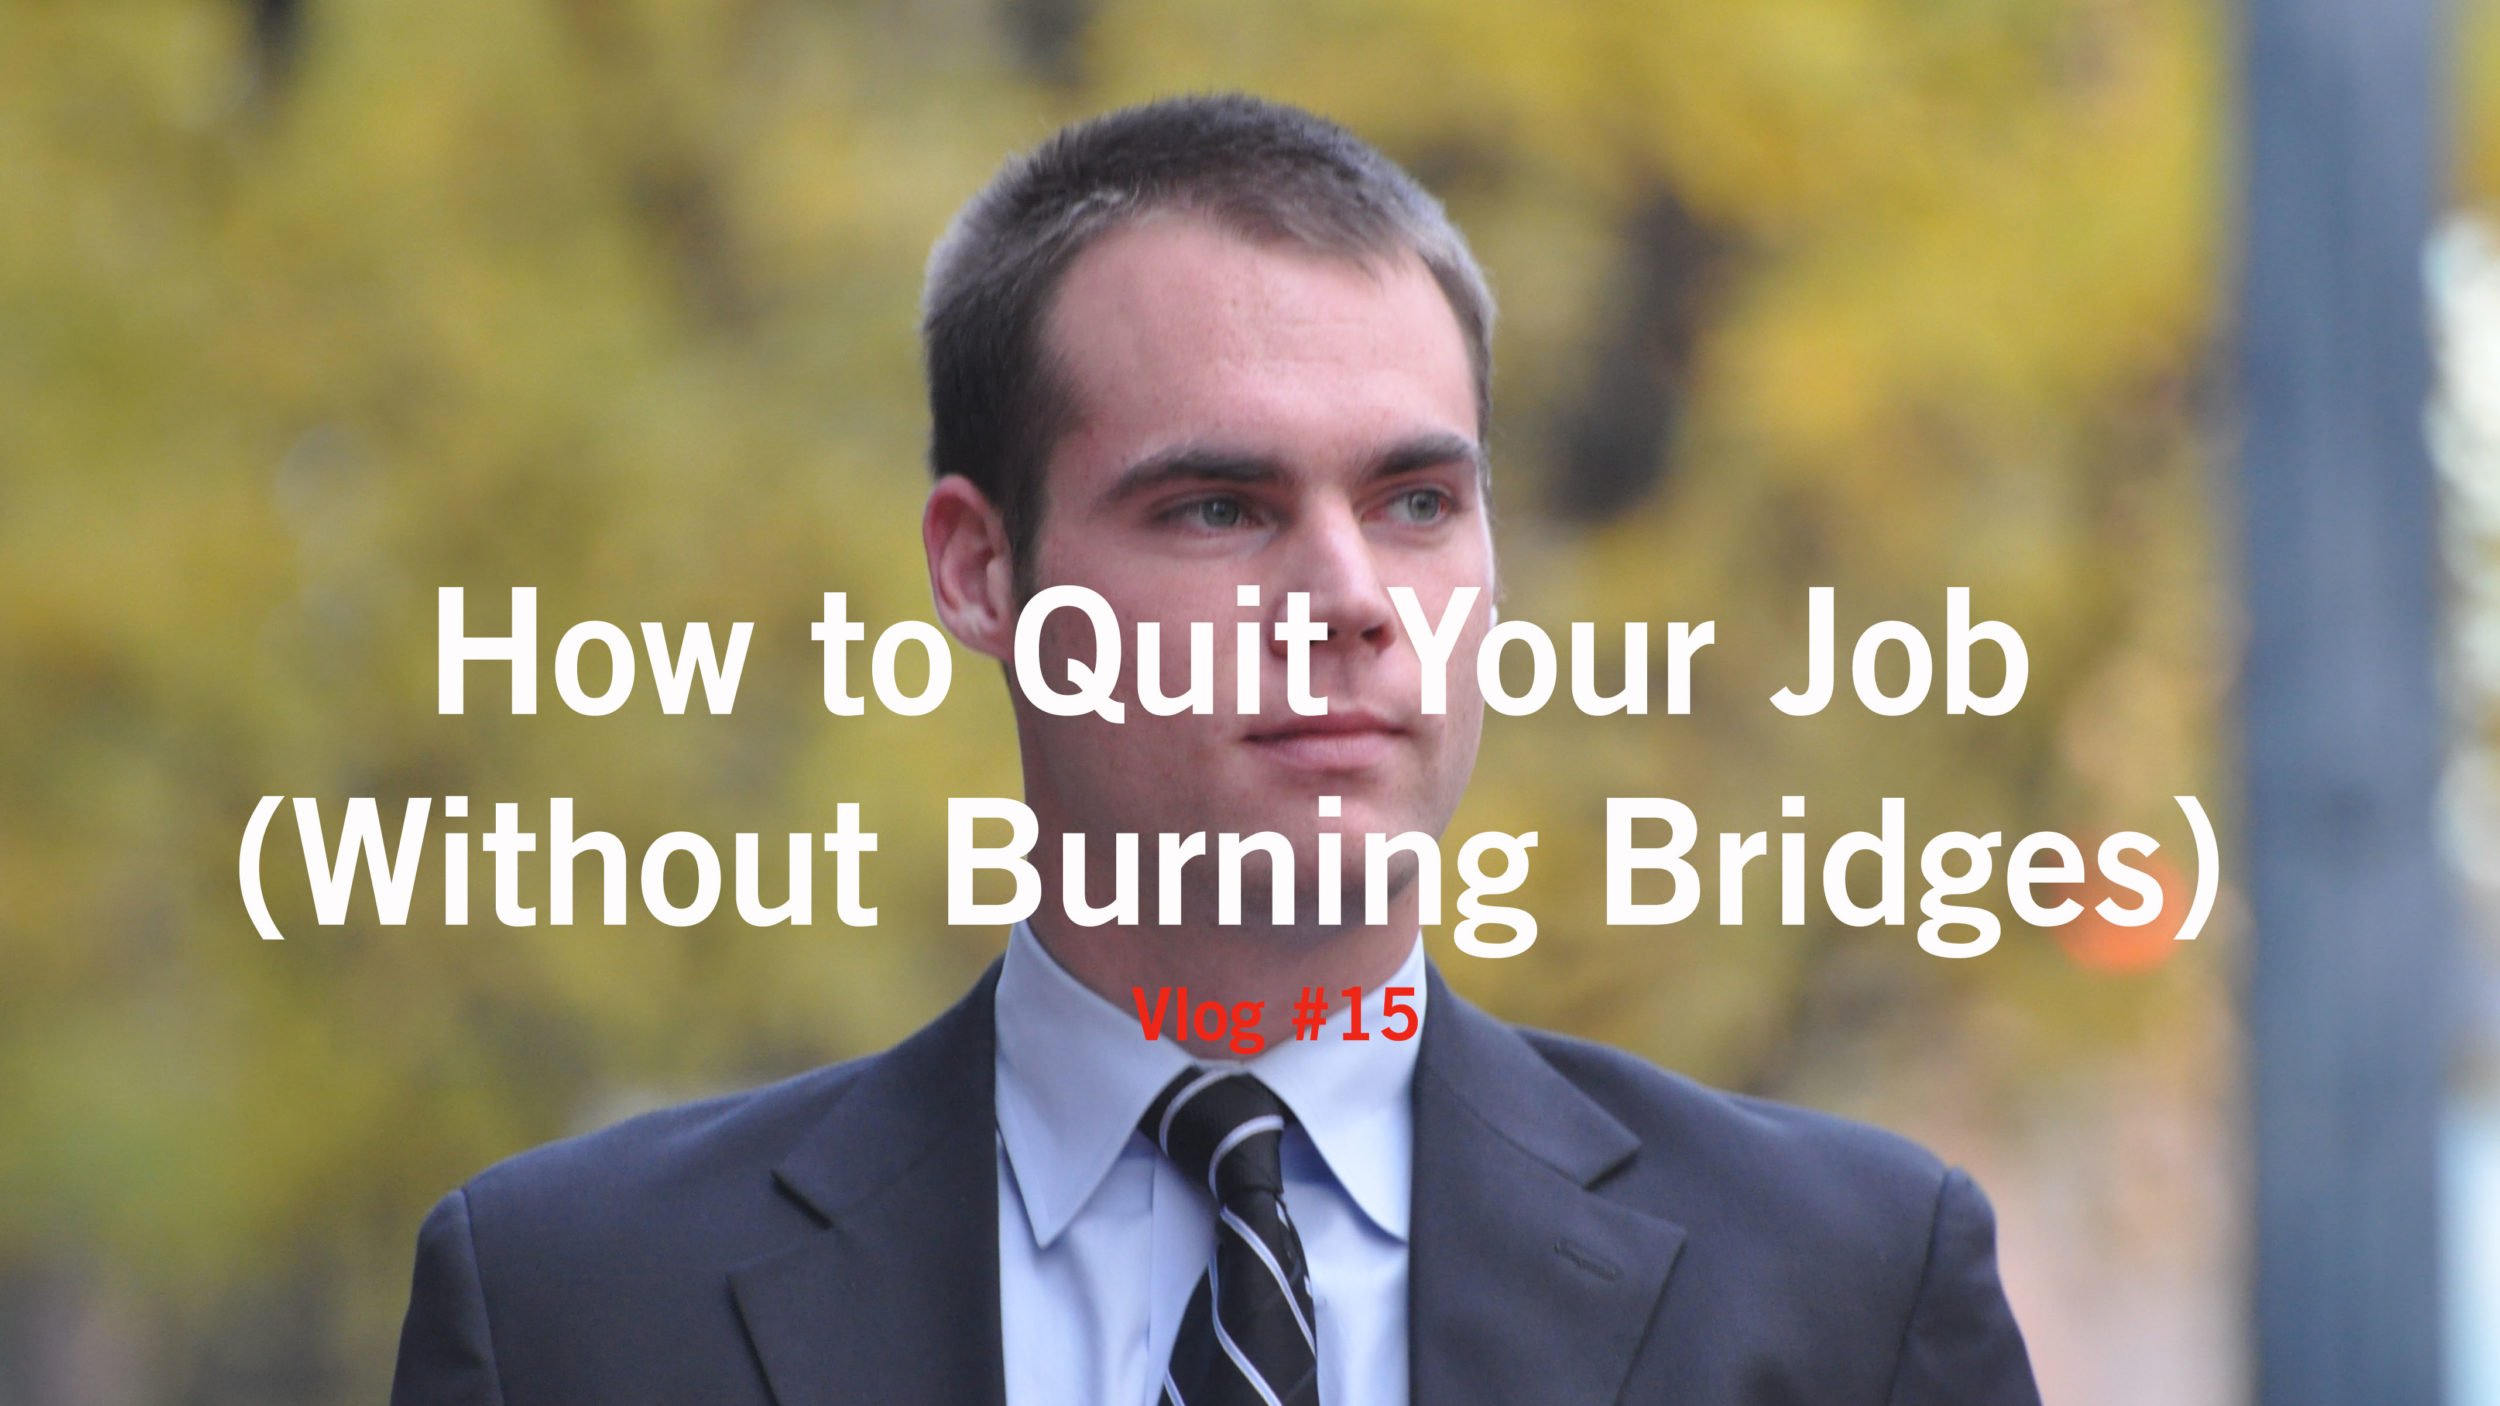 5 Ways to Leave Your Job Without Burning Bridges